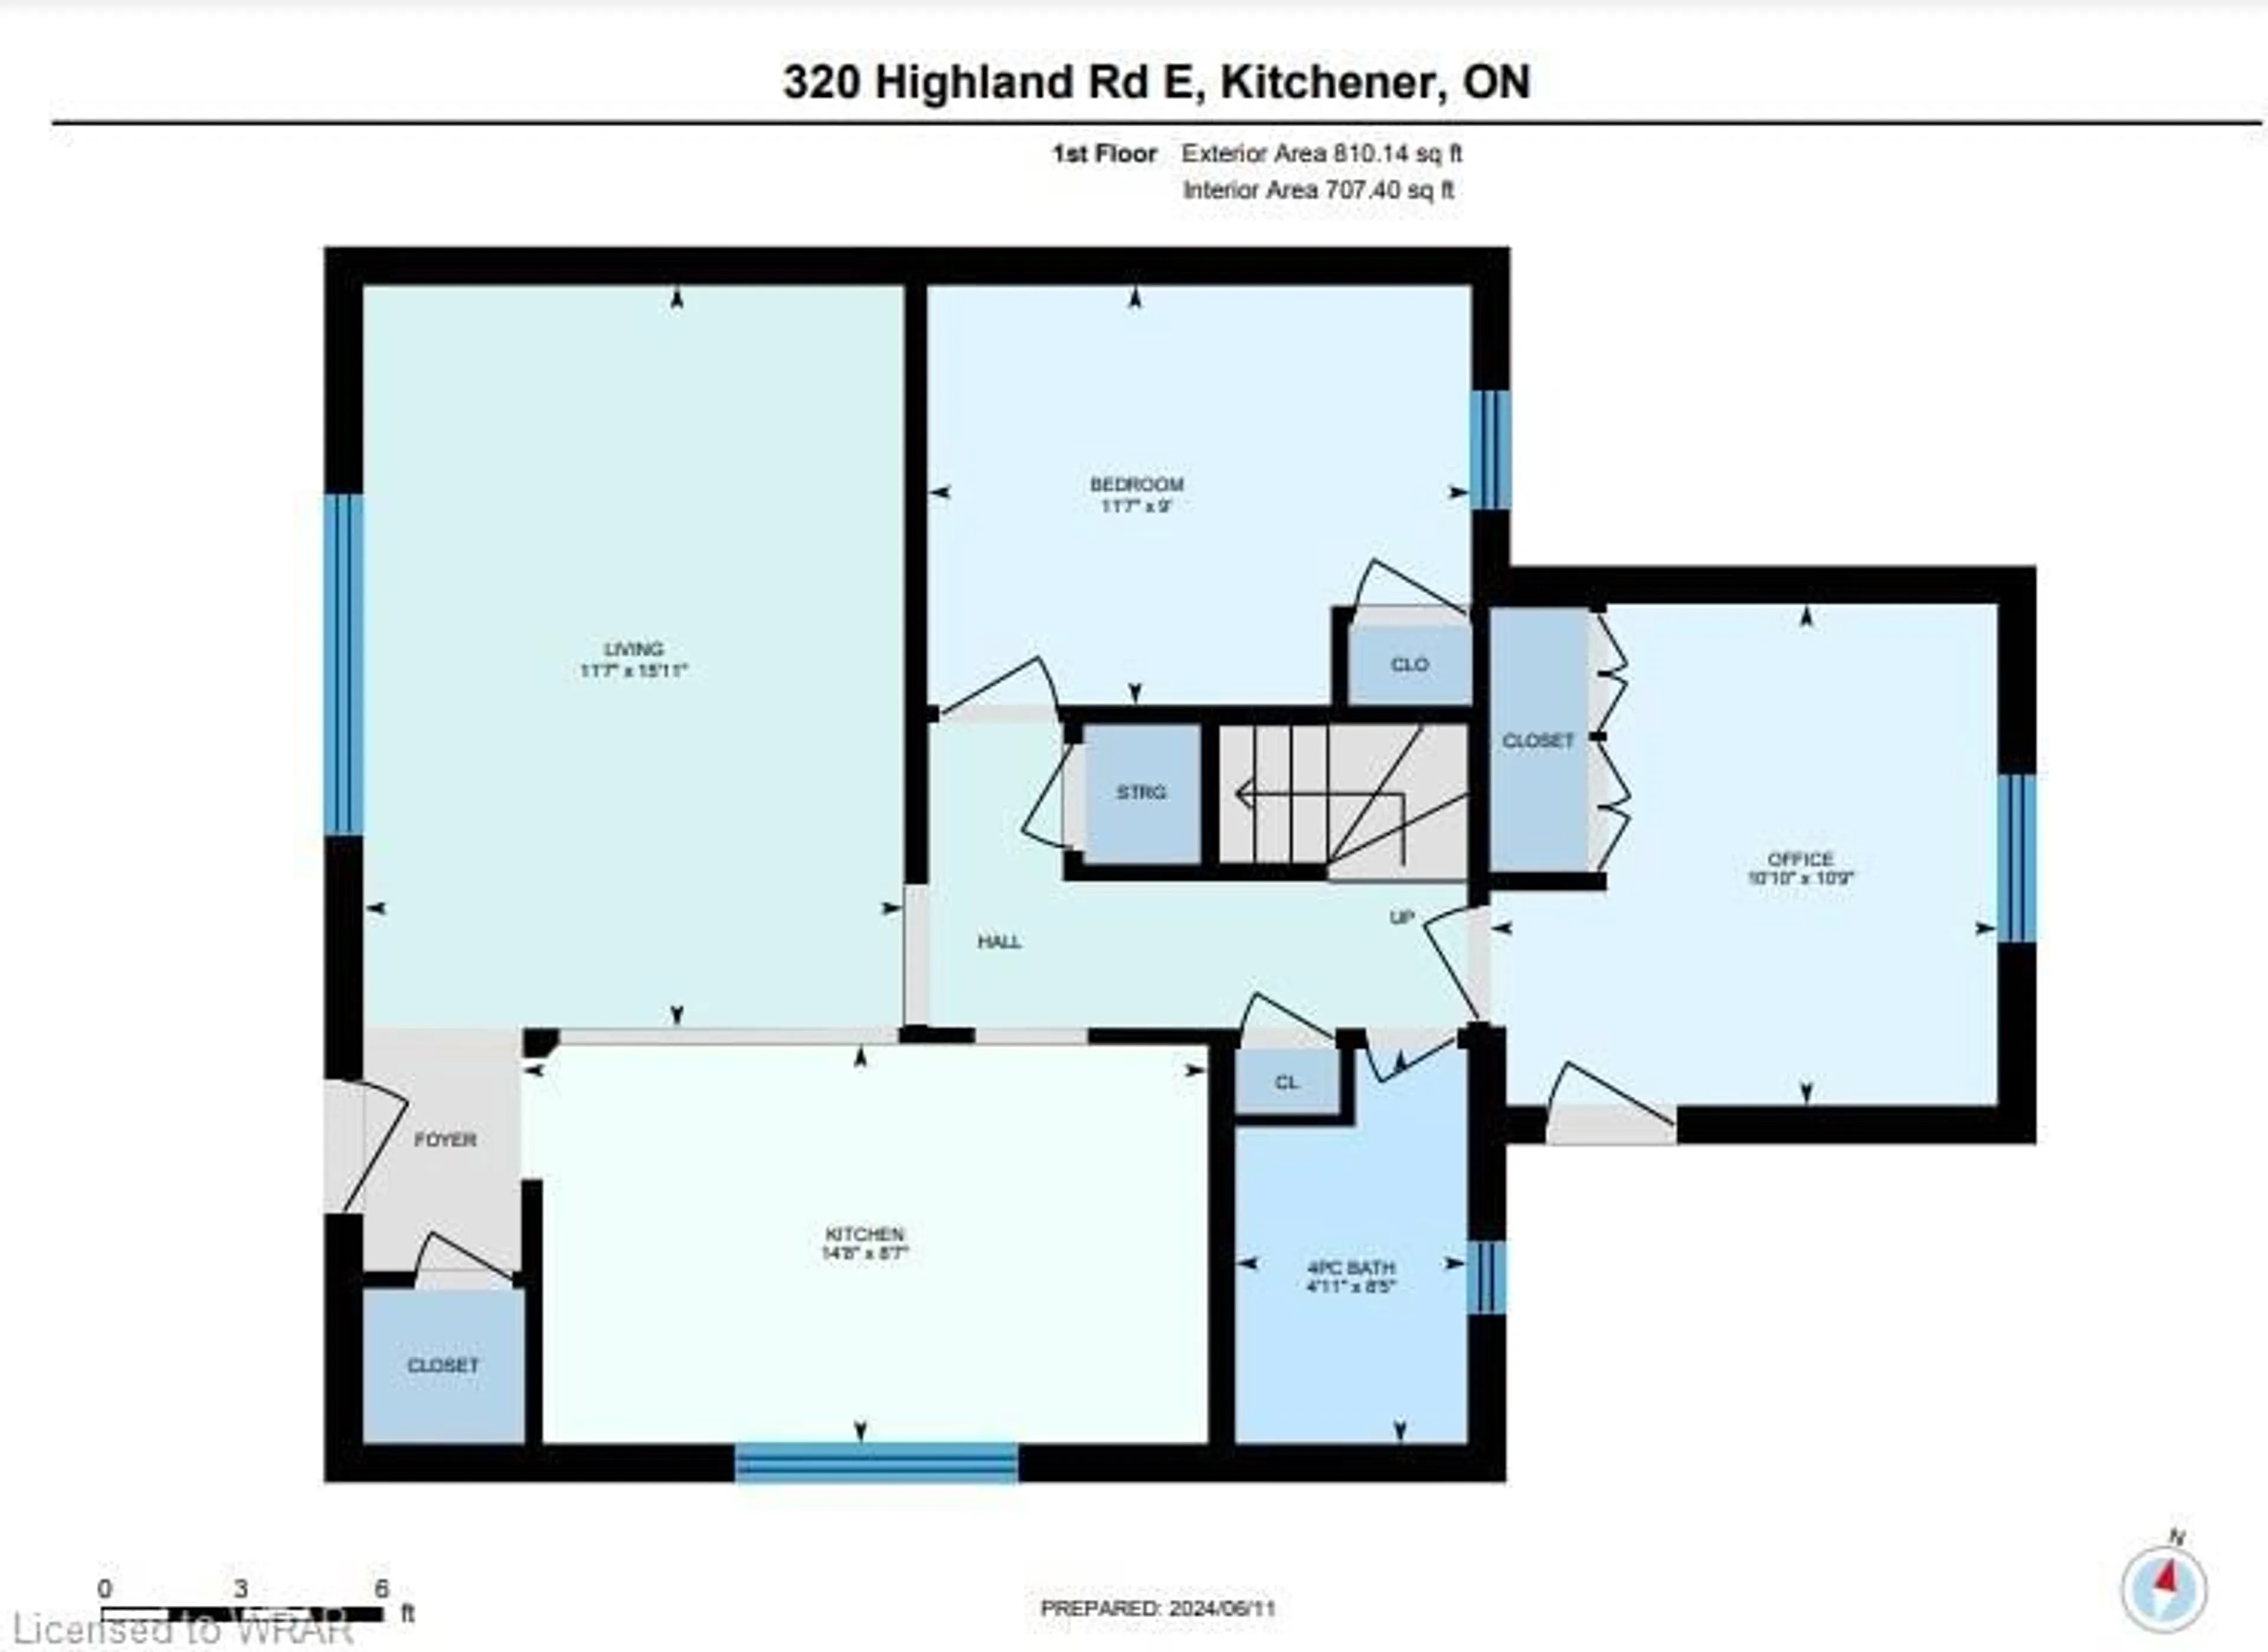 Floor plan for 320 Highland Rd, Kitchener Ontario N2M 3W4